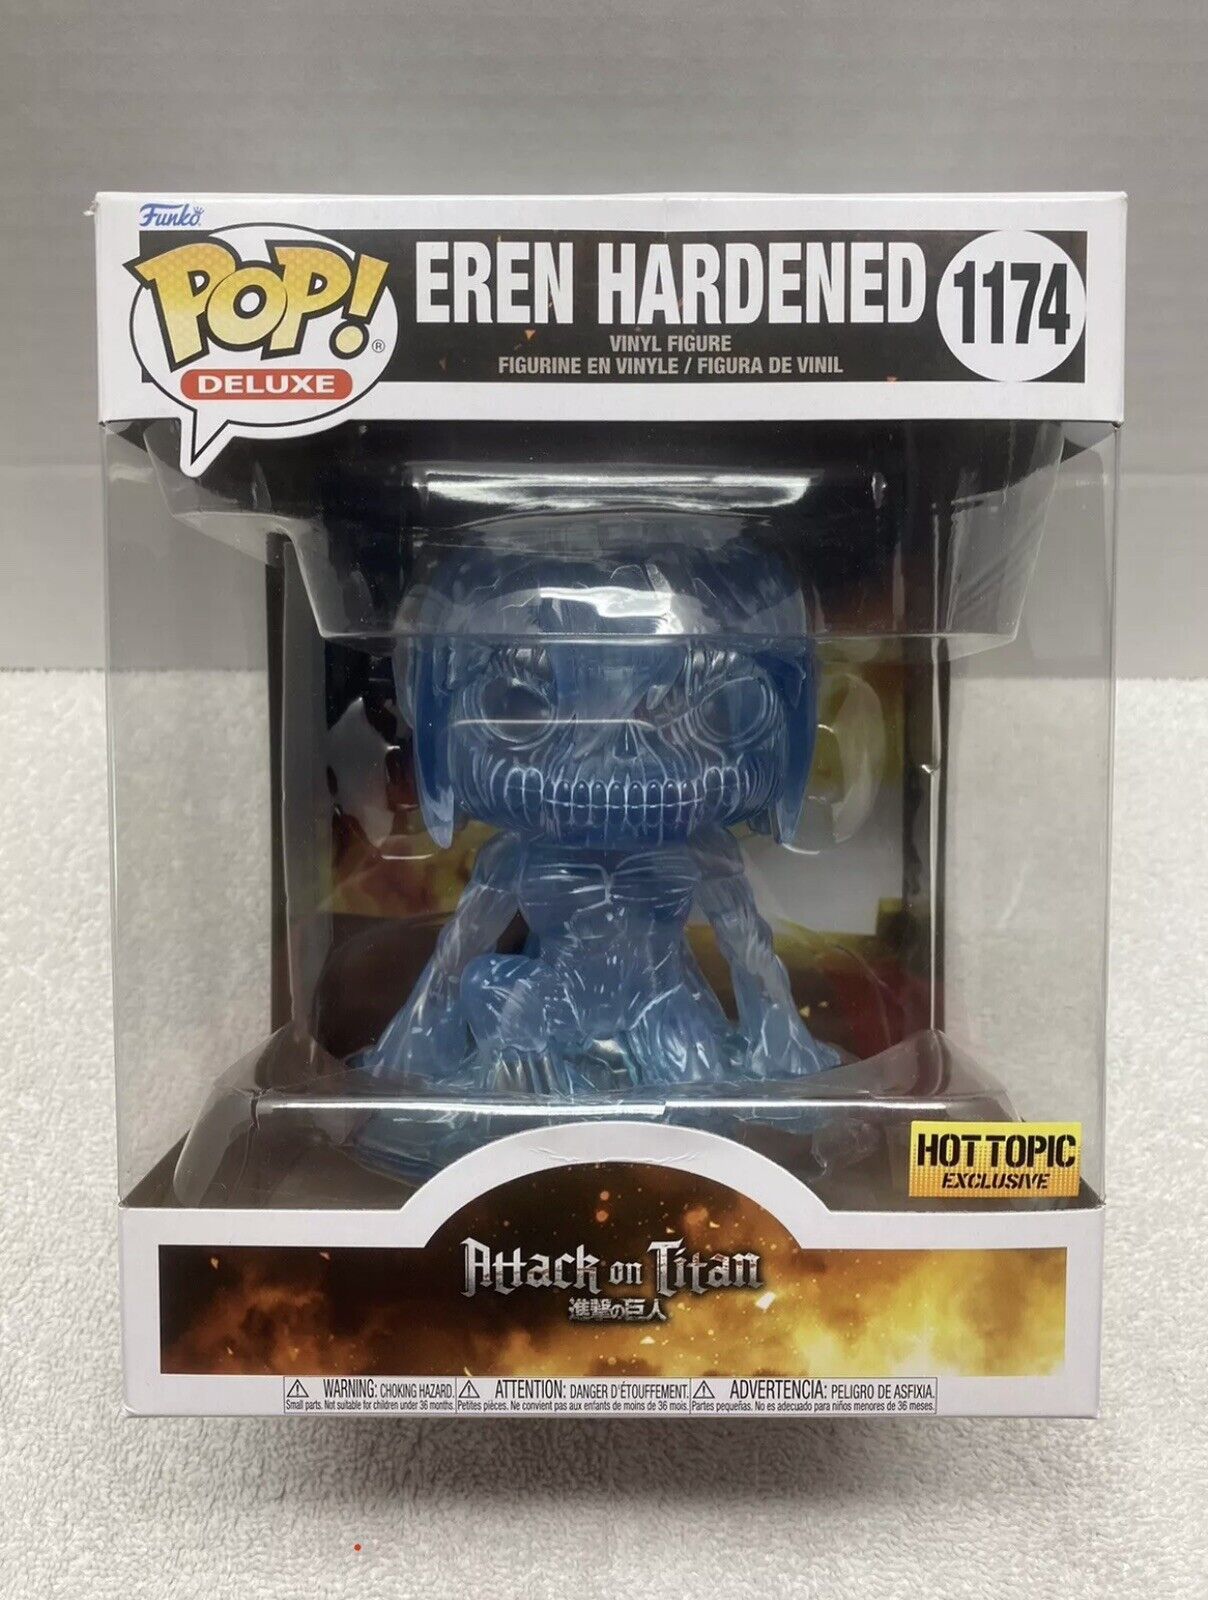 Eren Hardened Hot Topic Exclusive Funko Pop - Attack On Titan